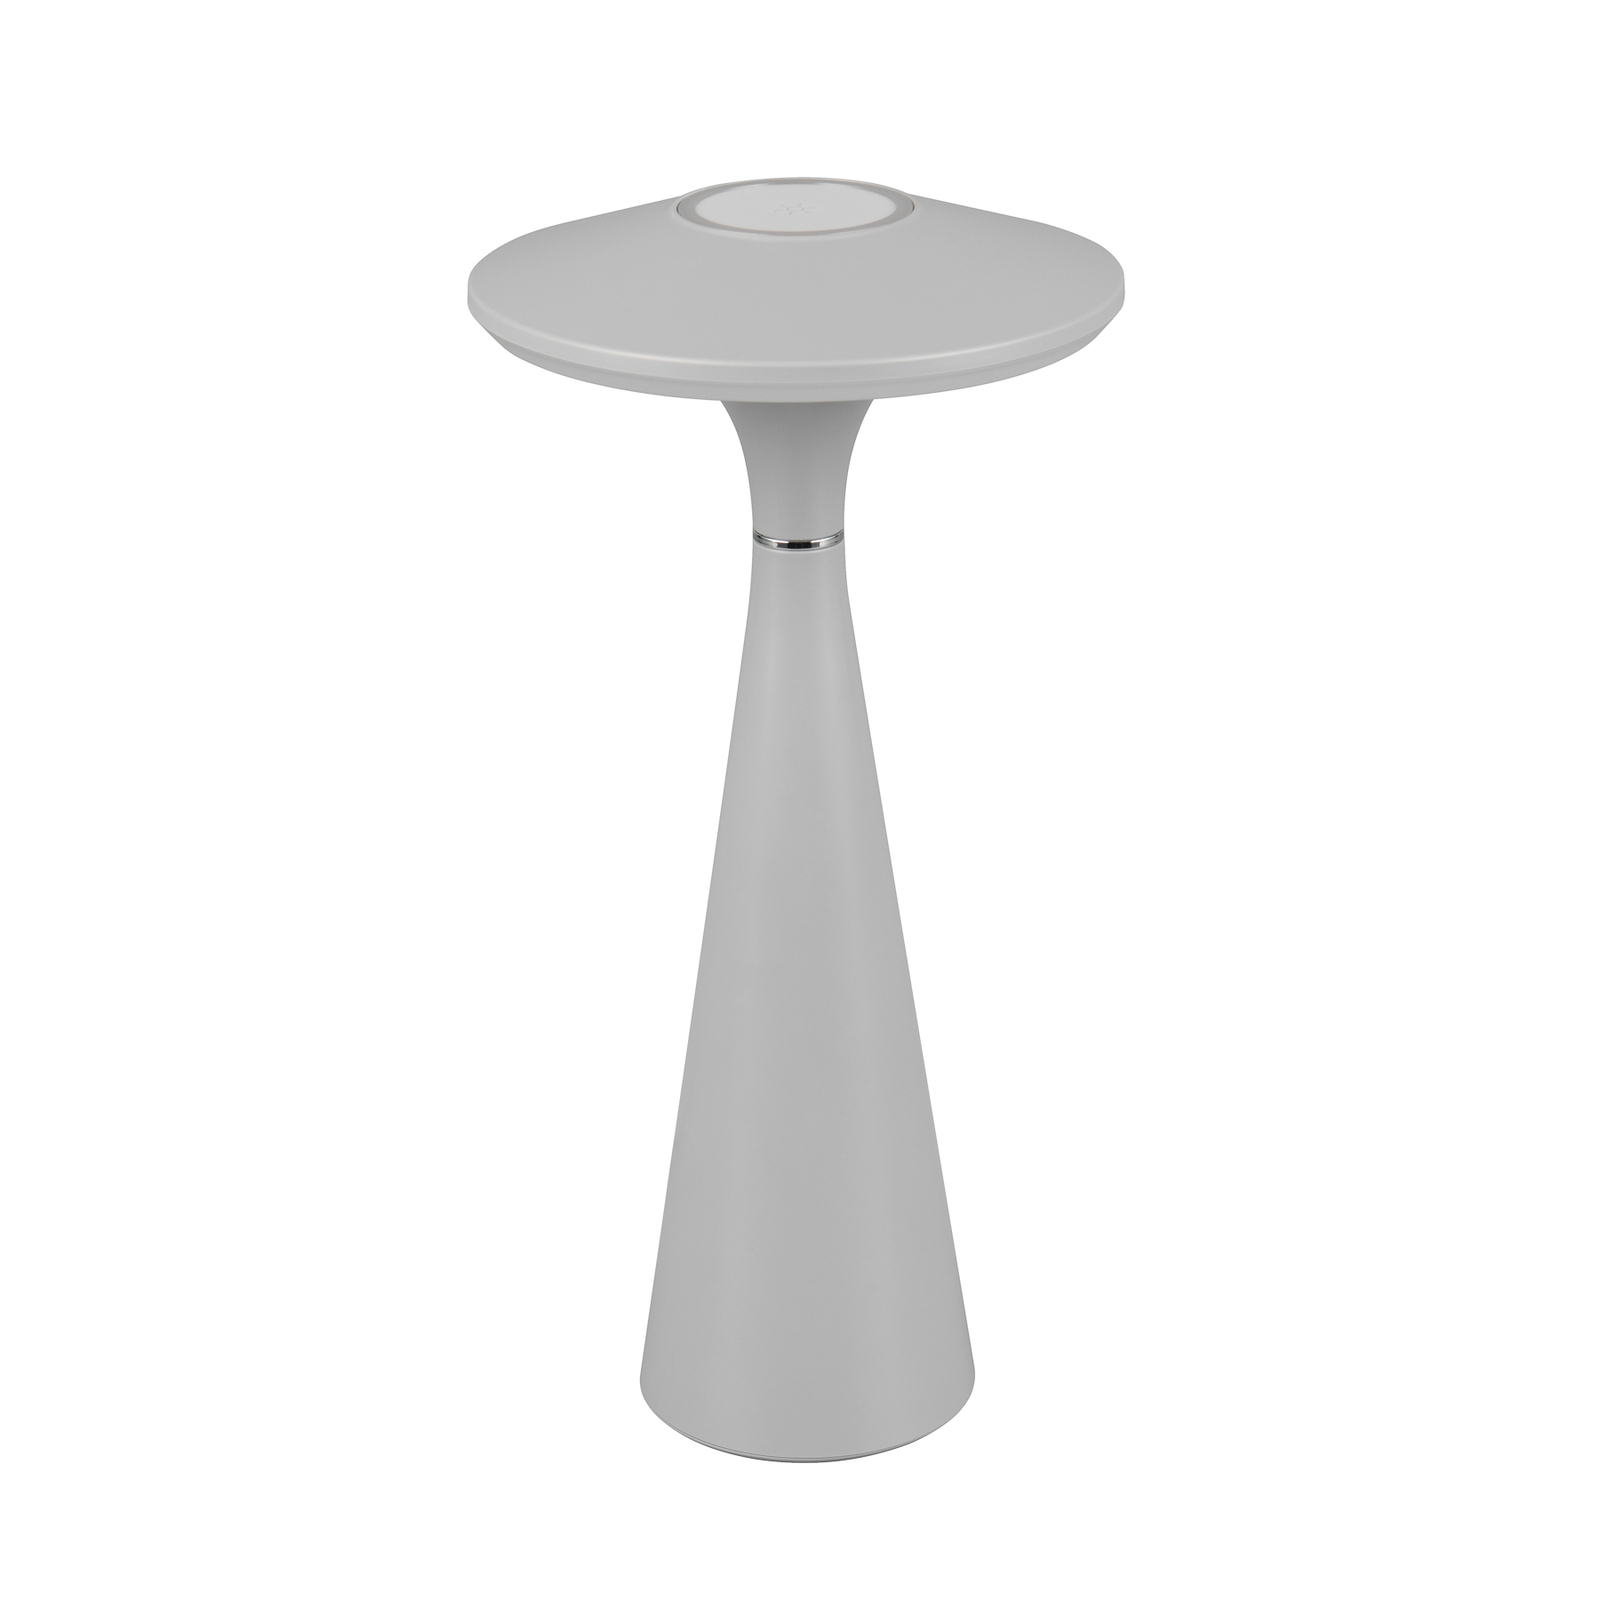 Torrez lámpara de mesa LED recargable, gris, altura 28,5 cm, CCT